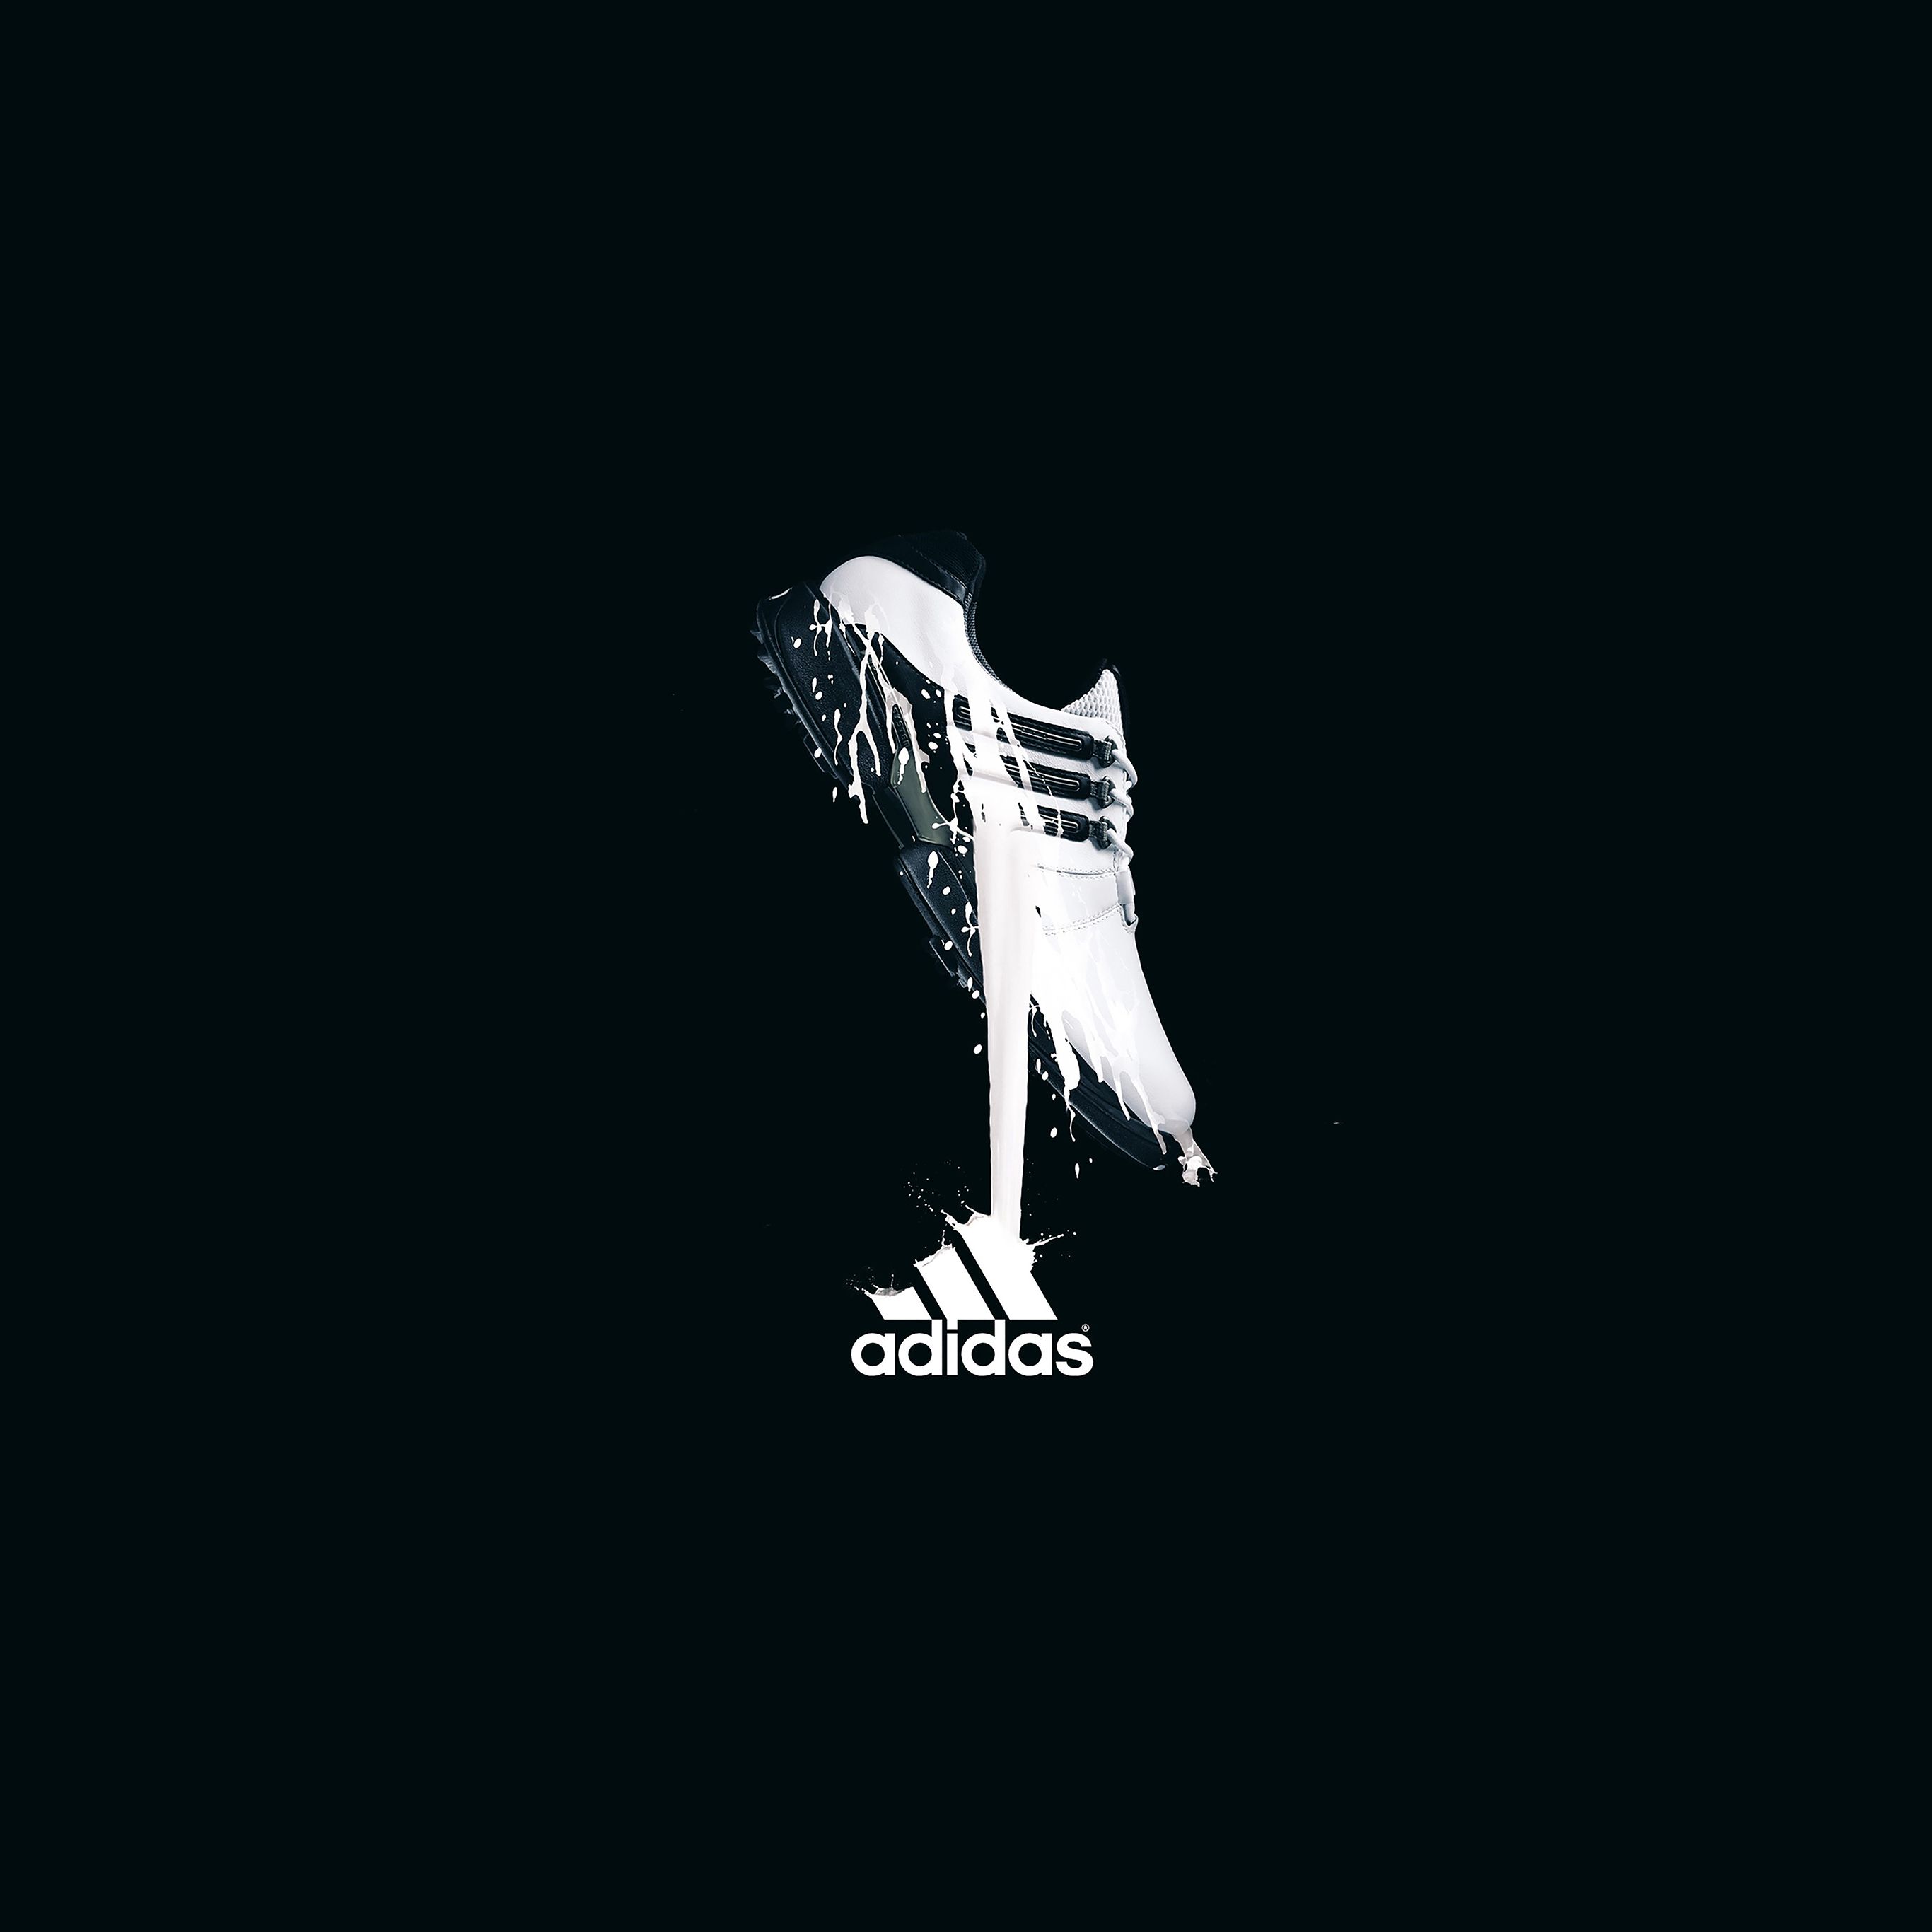 Wallpaper Adidas Black Logo Sports